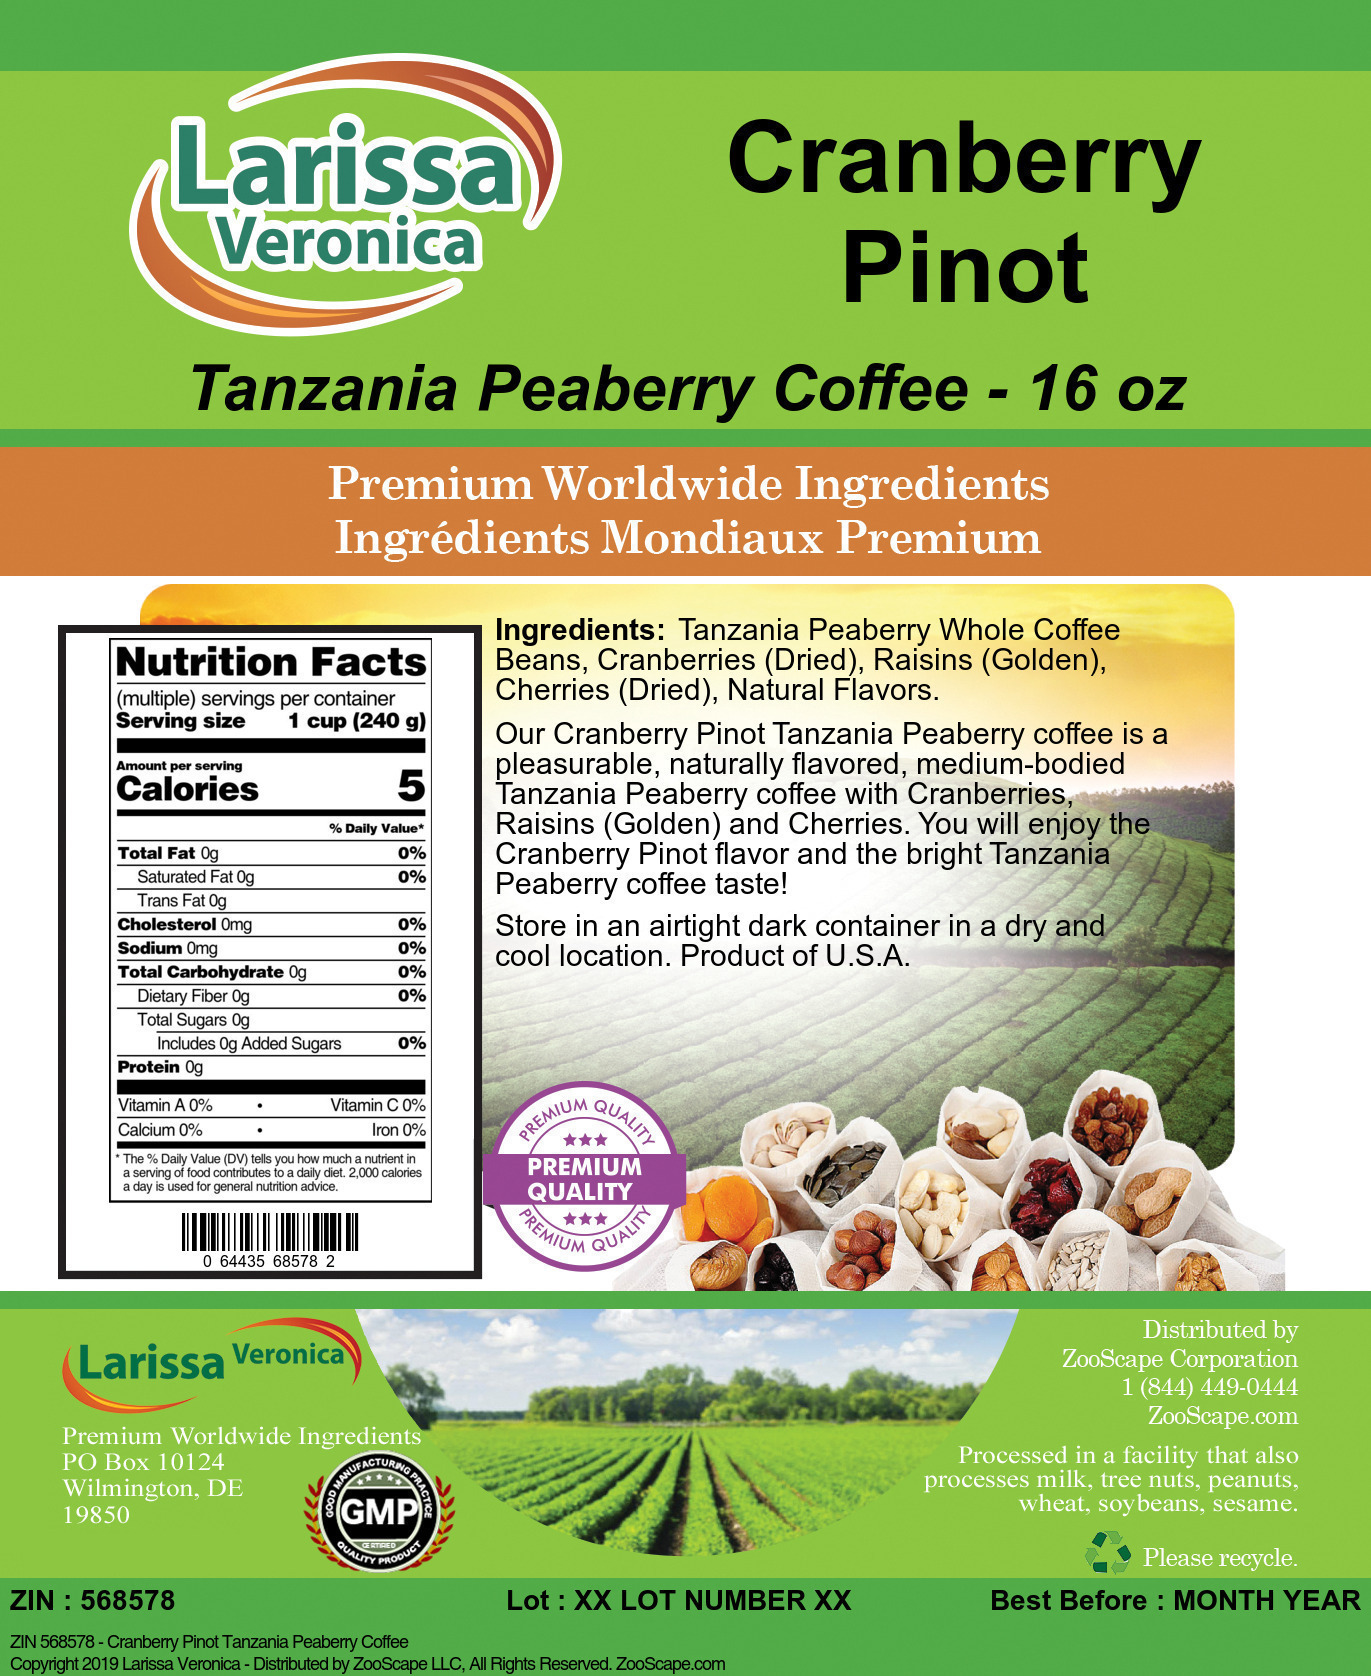 Cranberry Pinot Tanzania Peaberry Coffee - Label